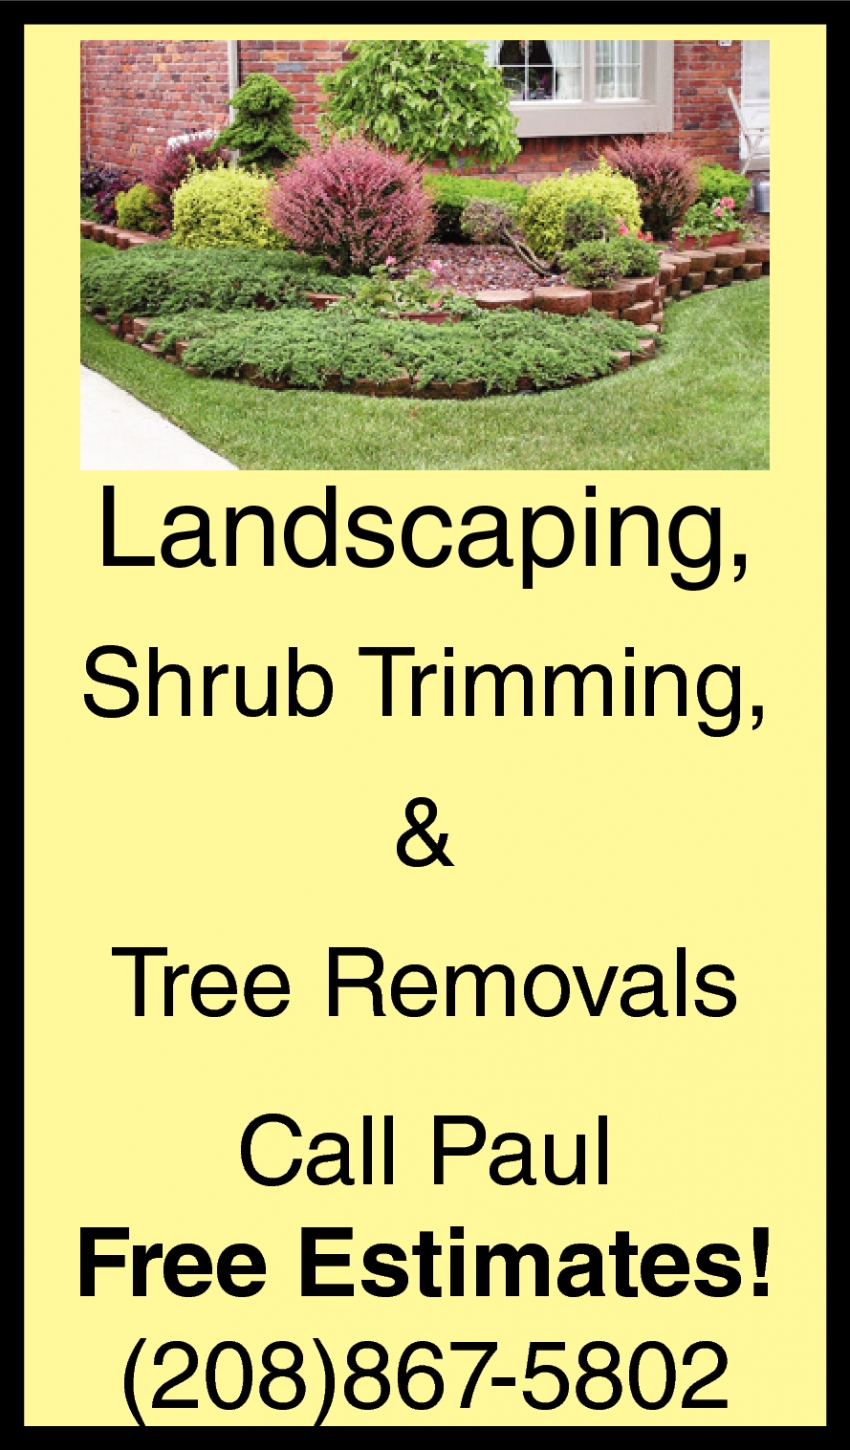 Landscaping, Shrub Trimming, & Tree